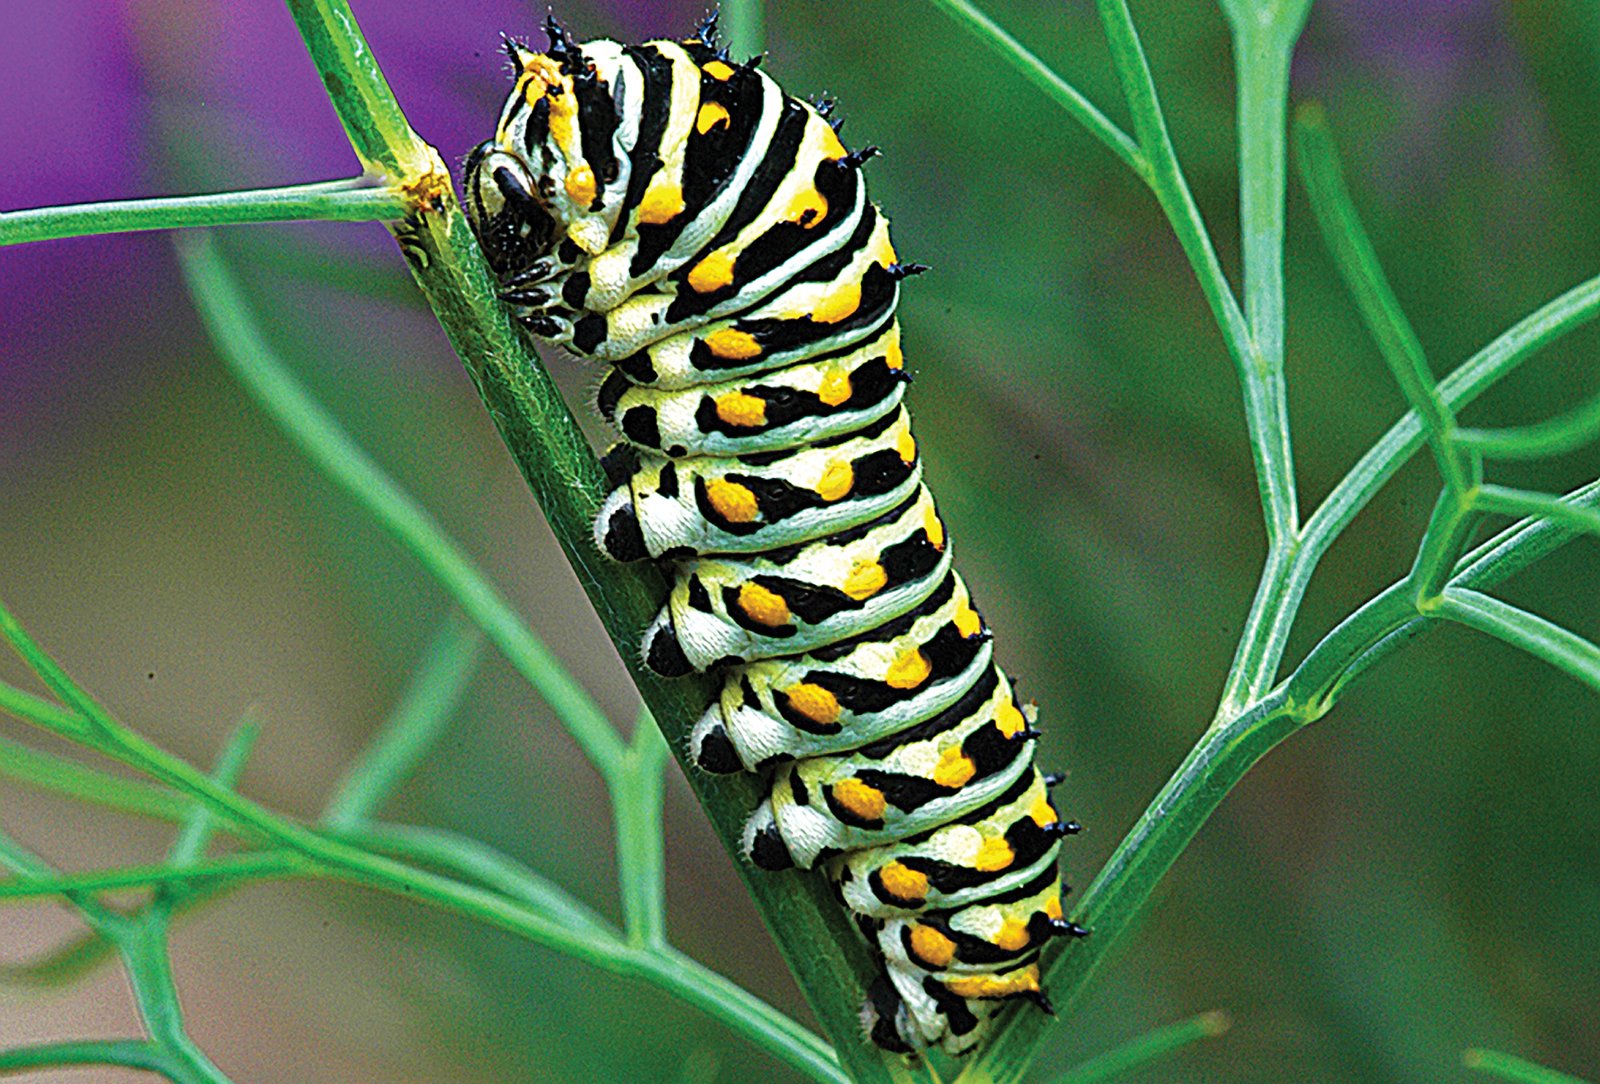 Black_Swallowtail_caterpillar_Ipswich_River_Wildlife_Sanctuay_MA